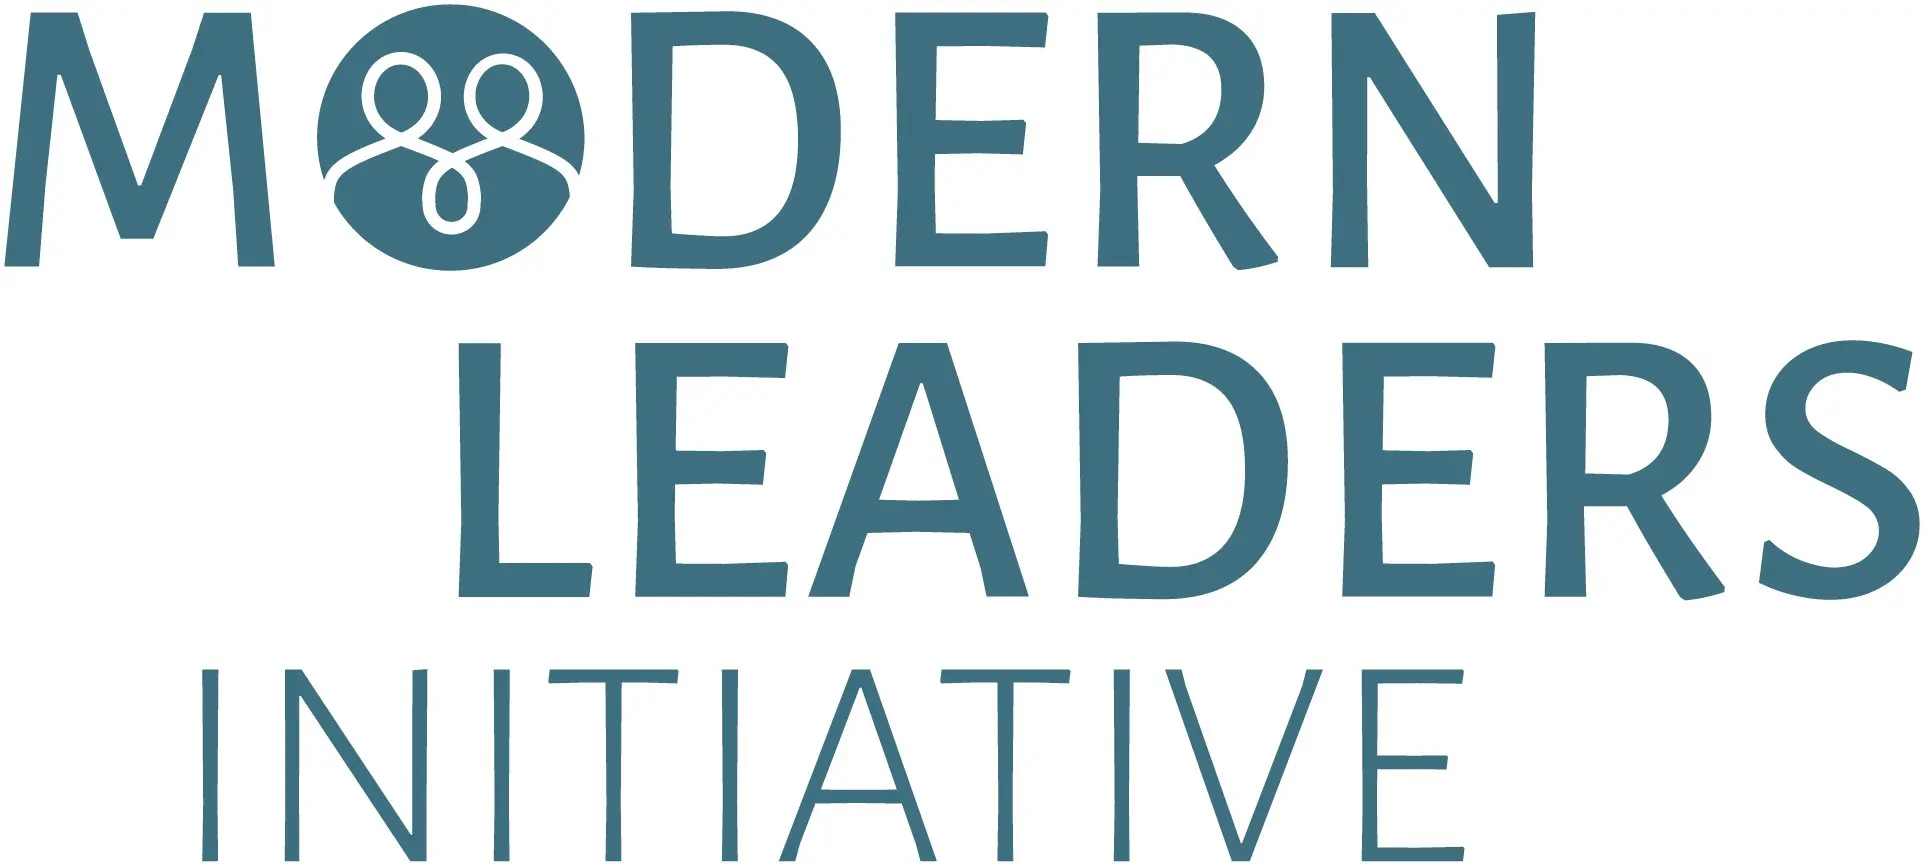 PRCC Modern Leaders Logo